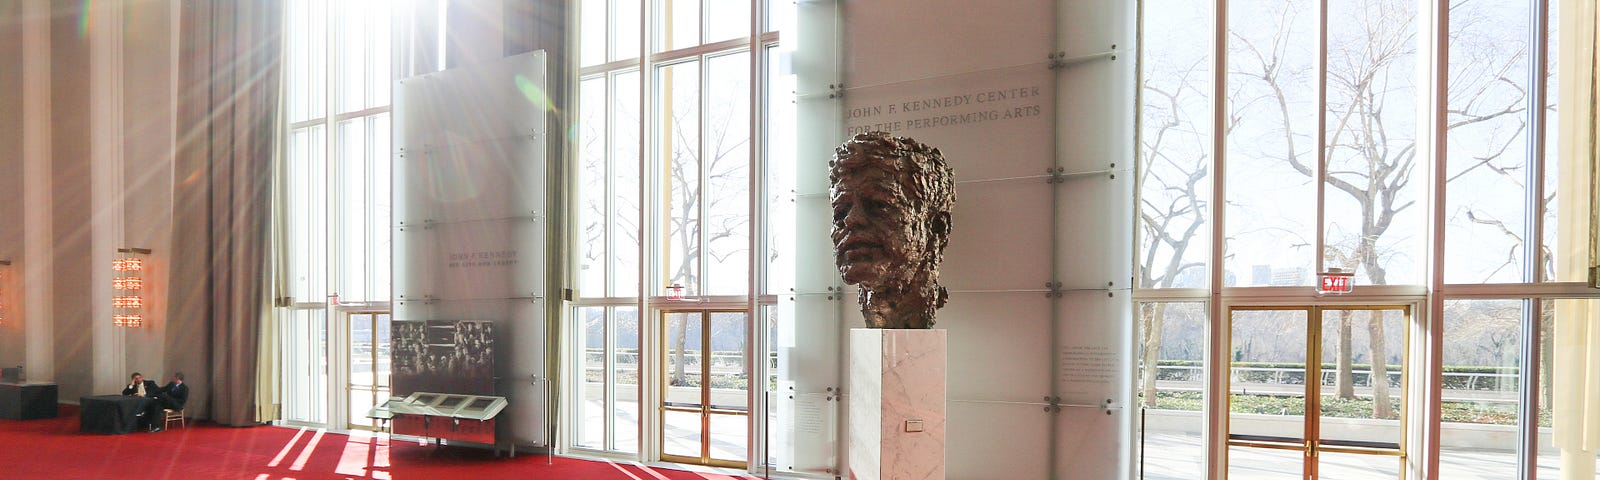 Nso – The Kennedy Center – Medium